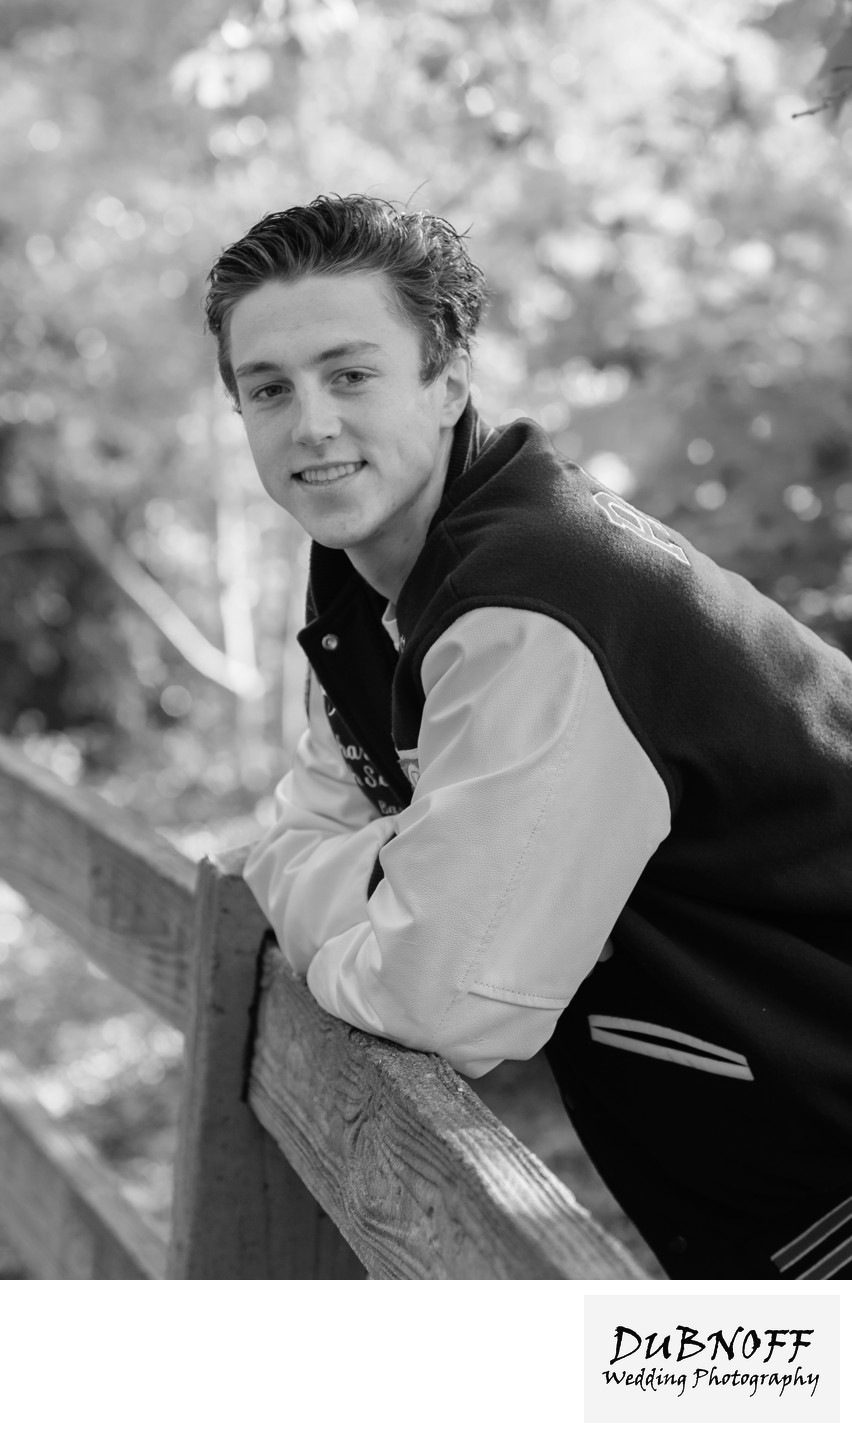 Black and White Portrait Photography - High School Boy